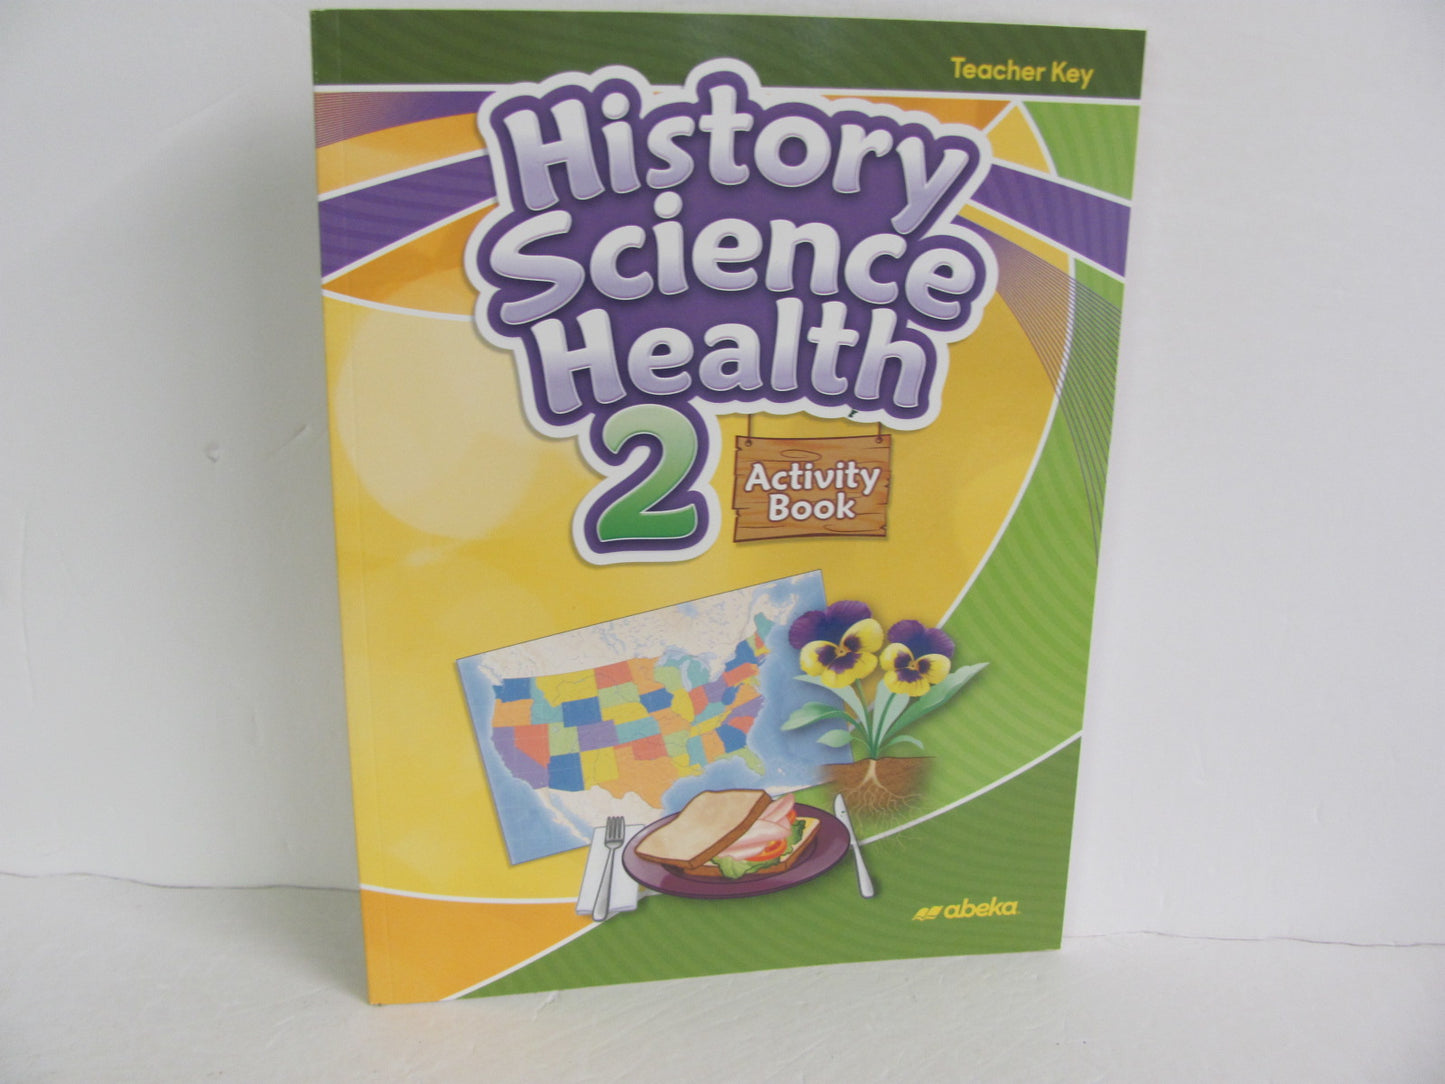 History Science Health Abeka Teacher Key  Pre-Owned 2nd Grade History Textbooks